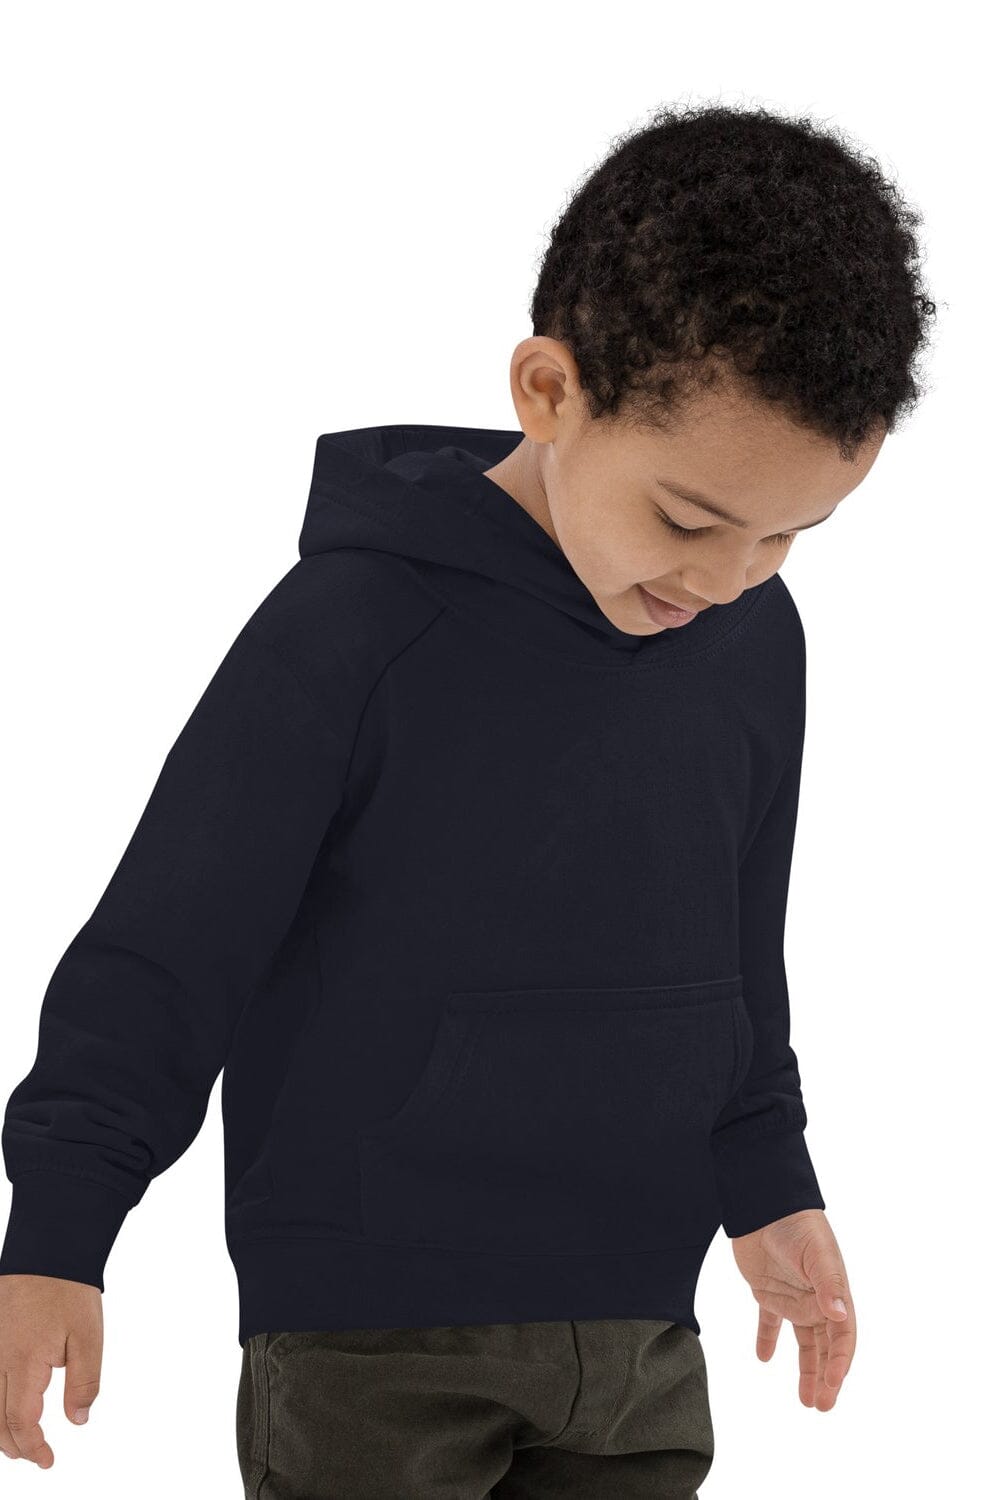 TUS Boy's Fleece Minor Fault Pullover Hoodie Boy's Pullover Hoodie Image Navy 11-12 Years 